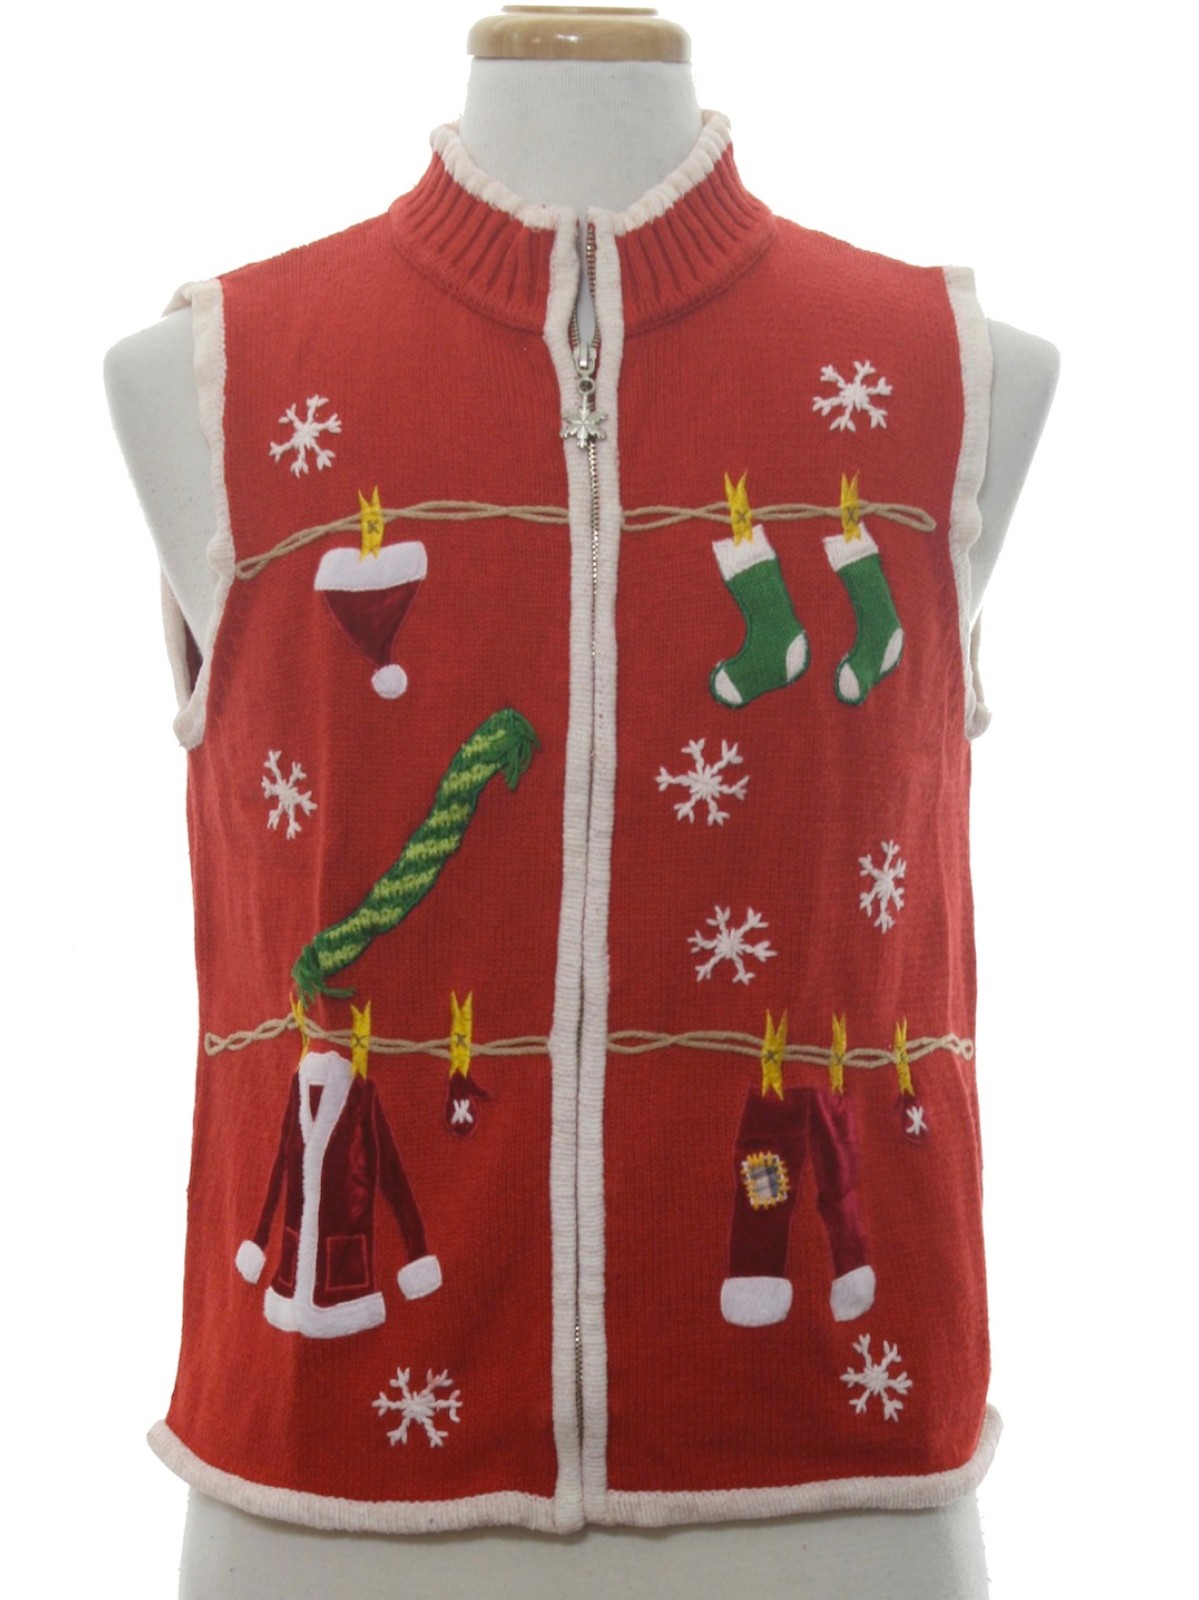 Ugly Christmas Sweater Vest: -Mercer St Studio- Unisex red background ...